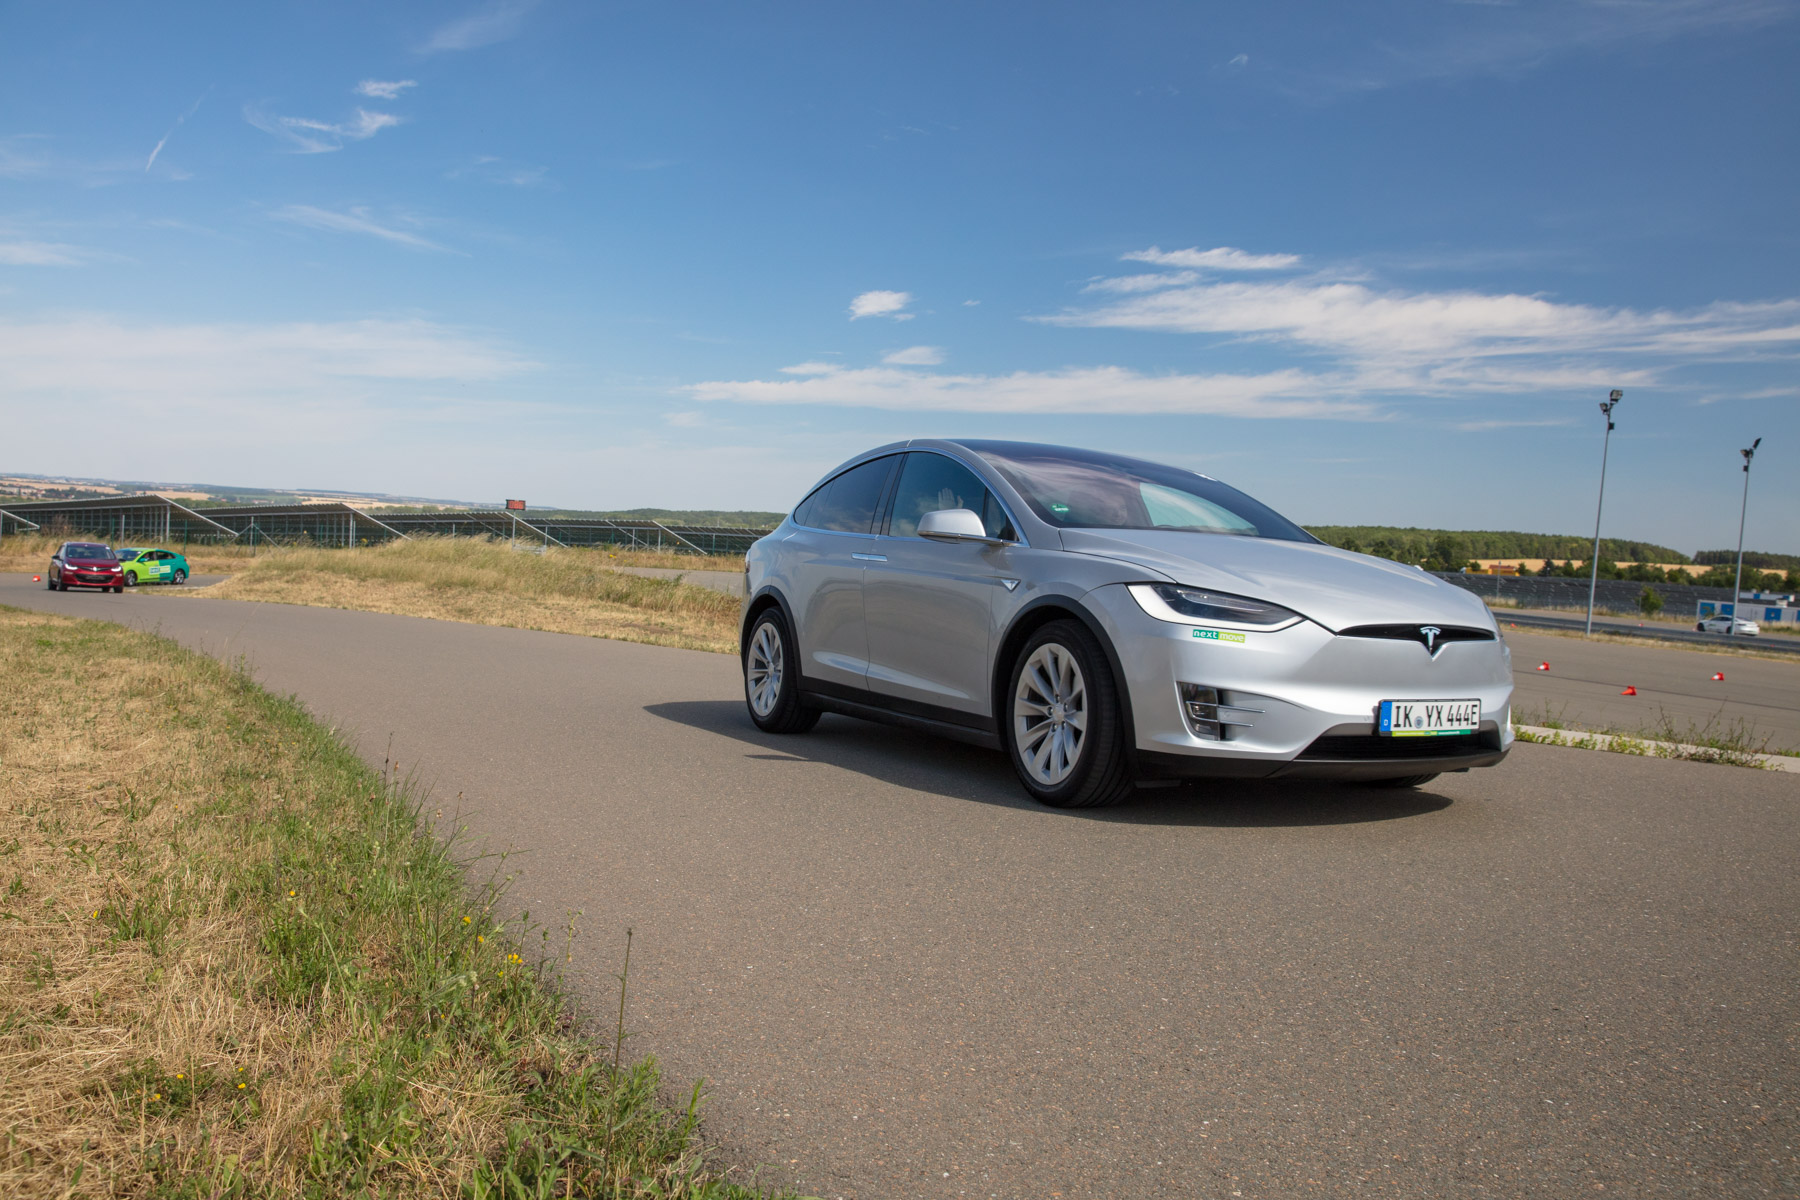 nextmove DAY Tesla Model X Test Drive